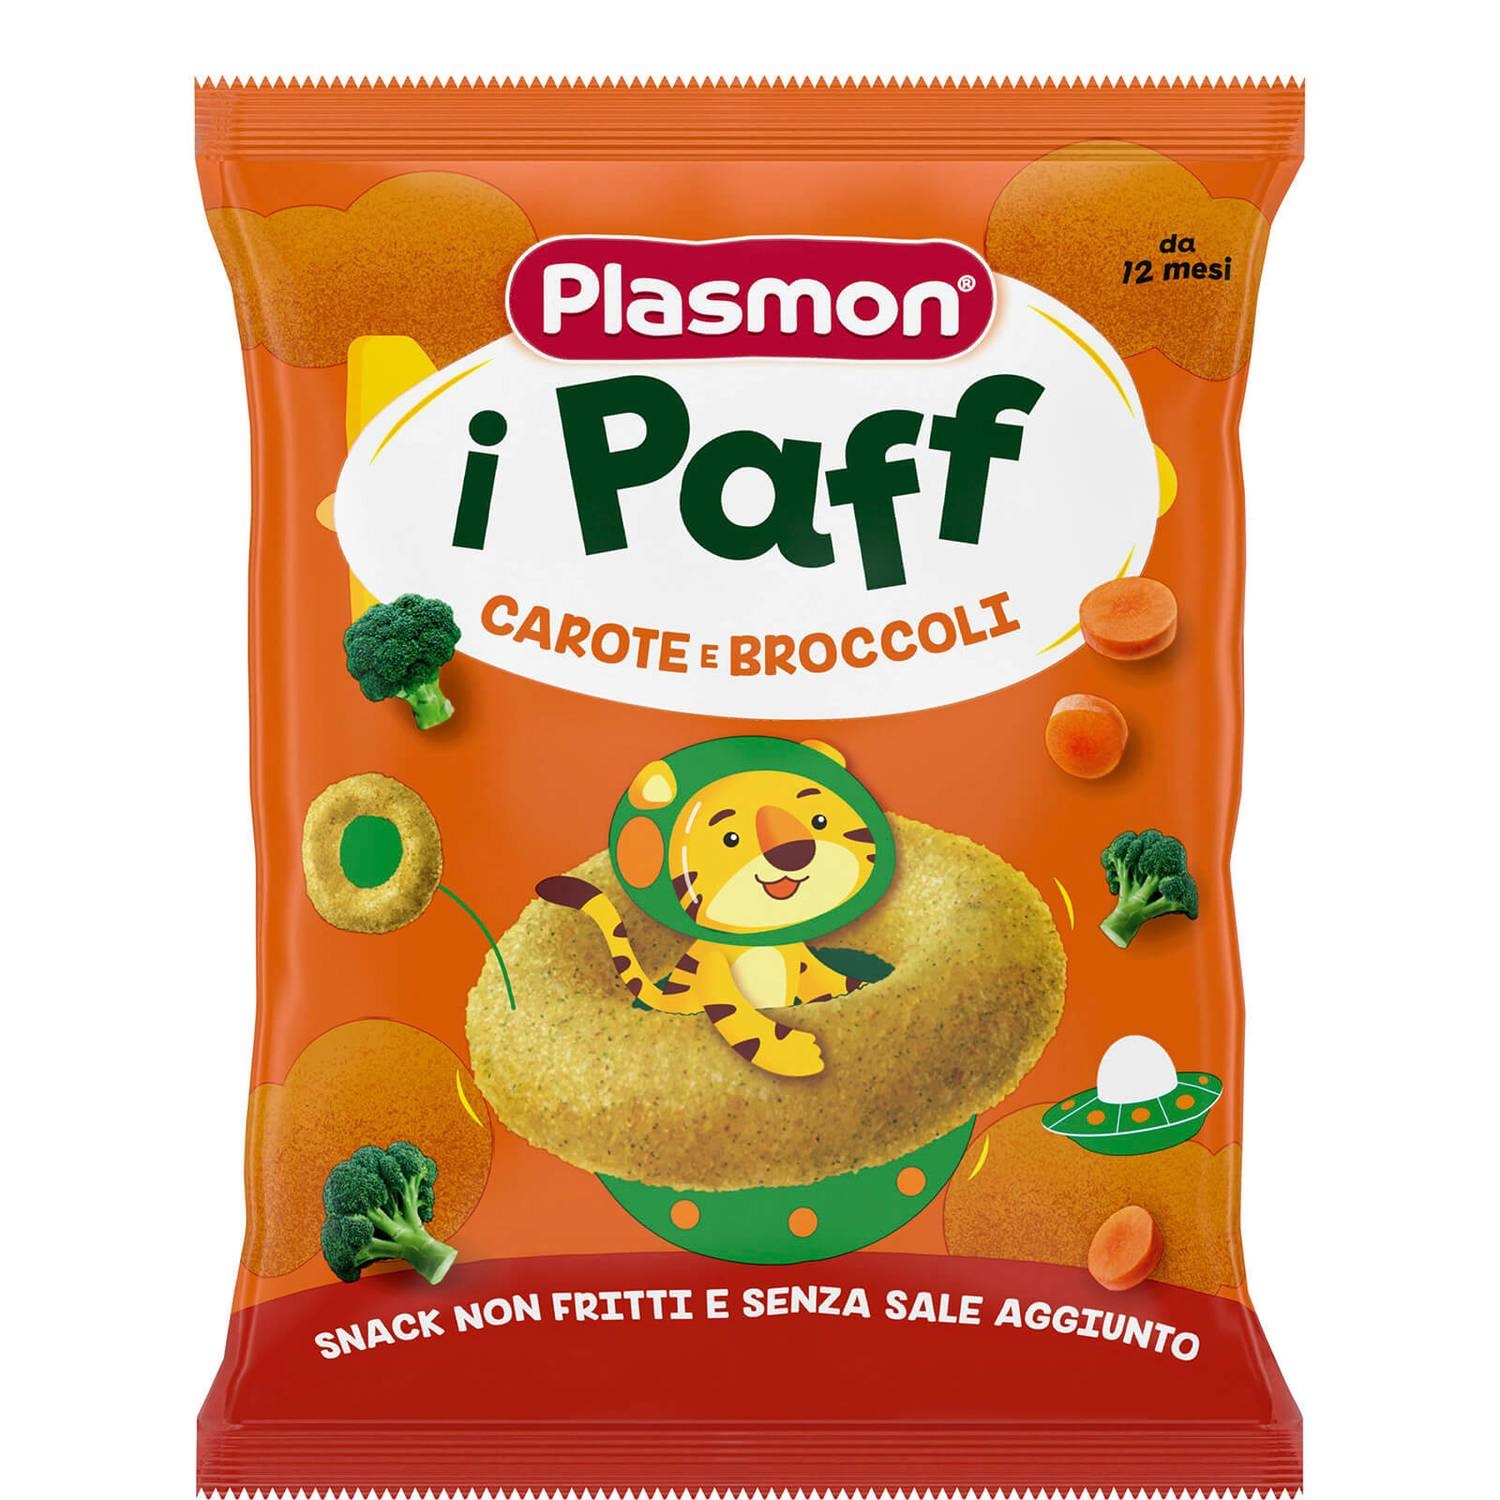 Image of I Paff Carota e Broccoli Plasmon 15g